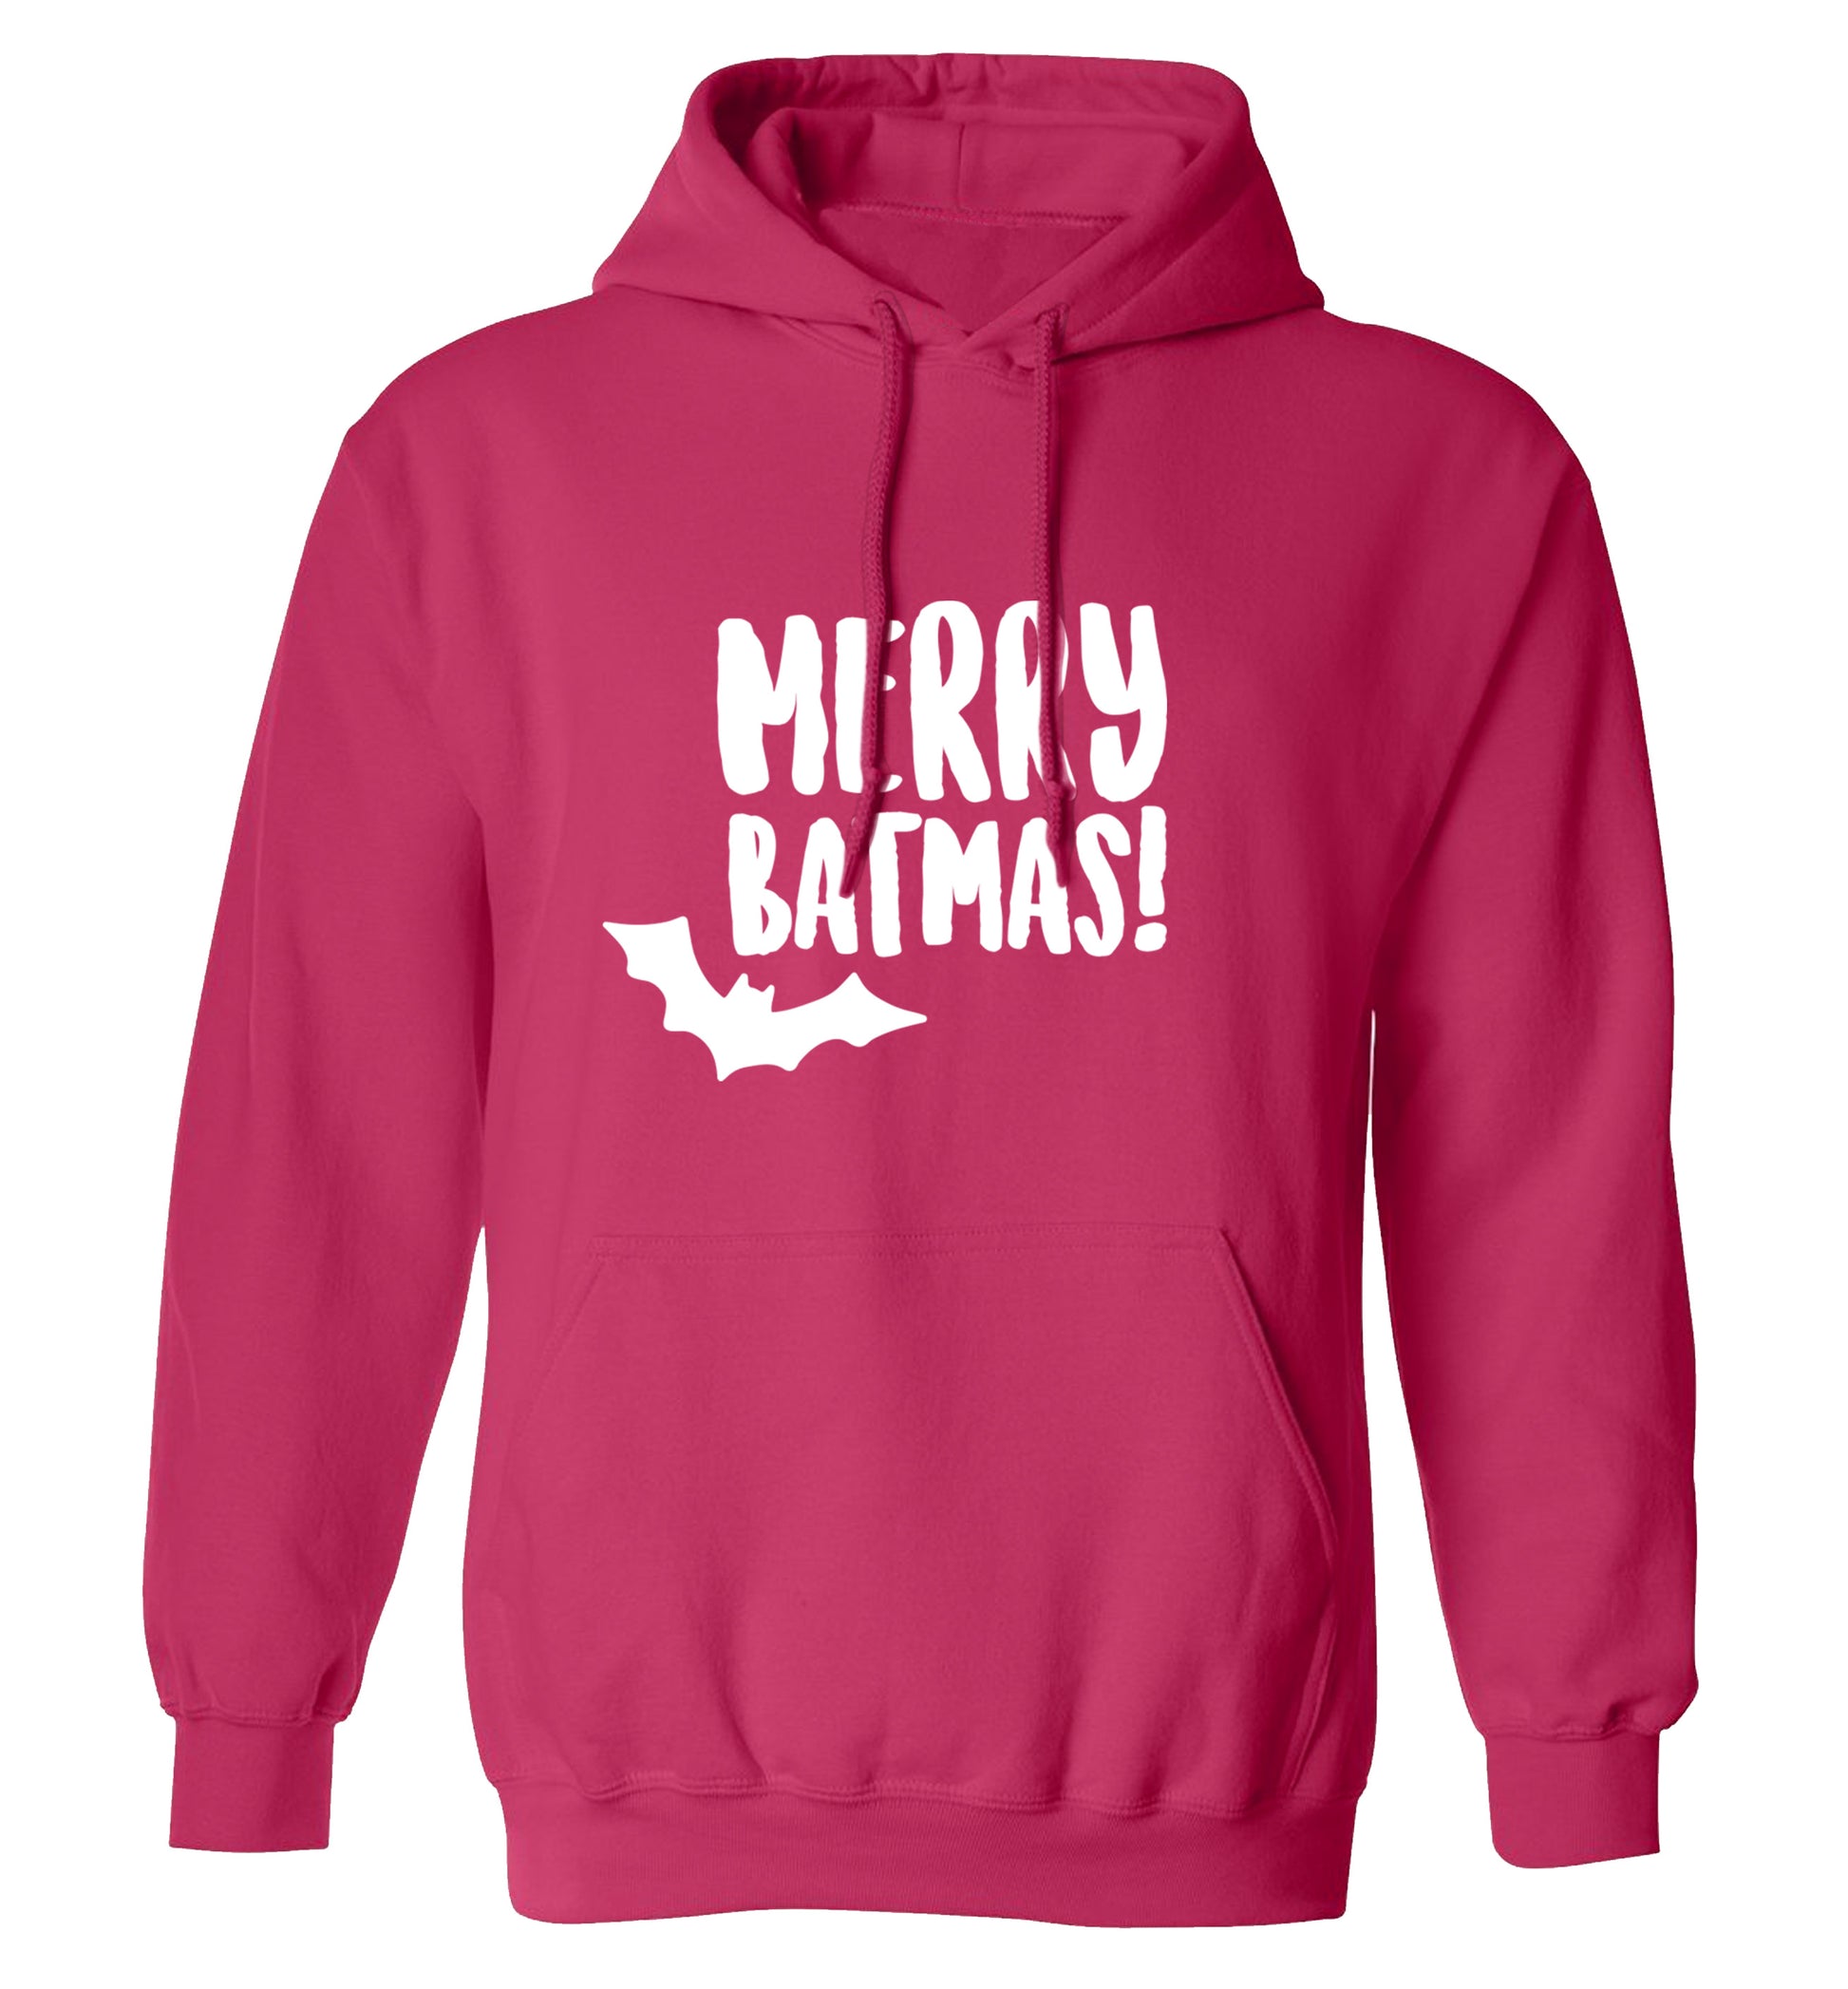 Merry Batmas adults unisex pink hoodie 2XL